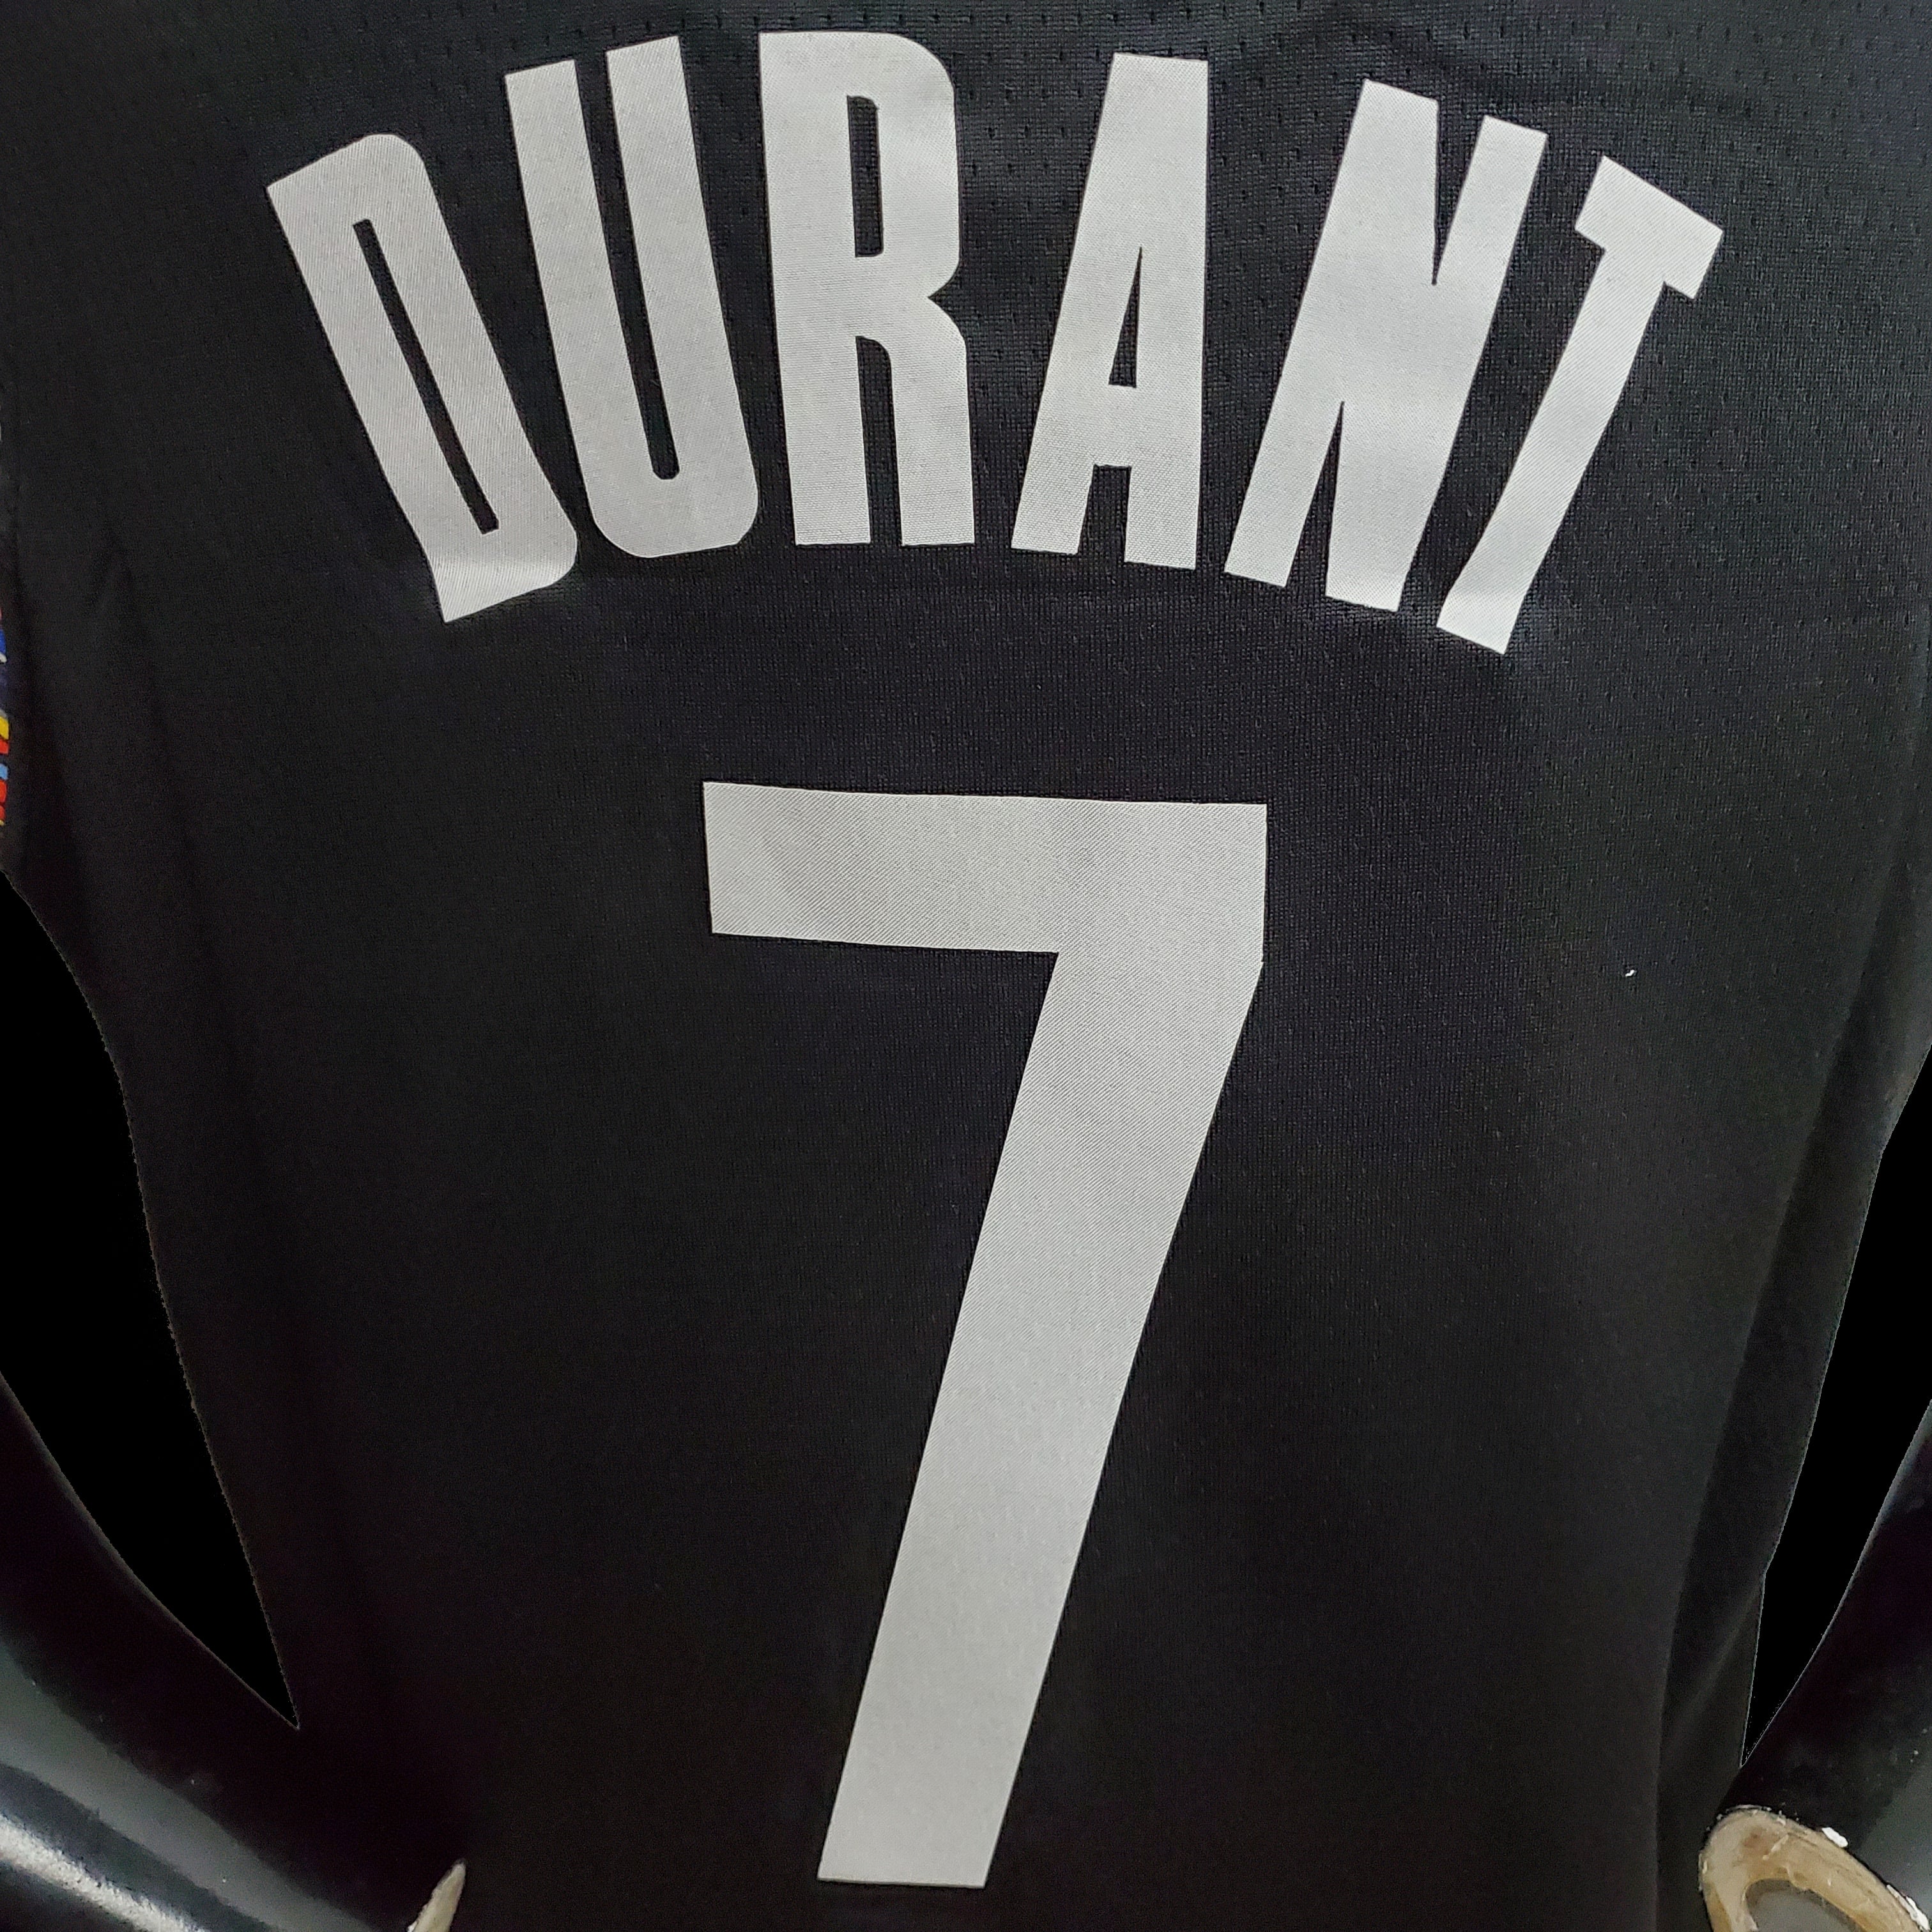 Nike Brooklyn Nets Authentic jersey 2020-2021 season Kevin Durant 